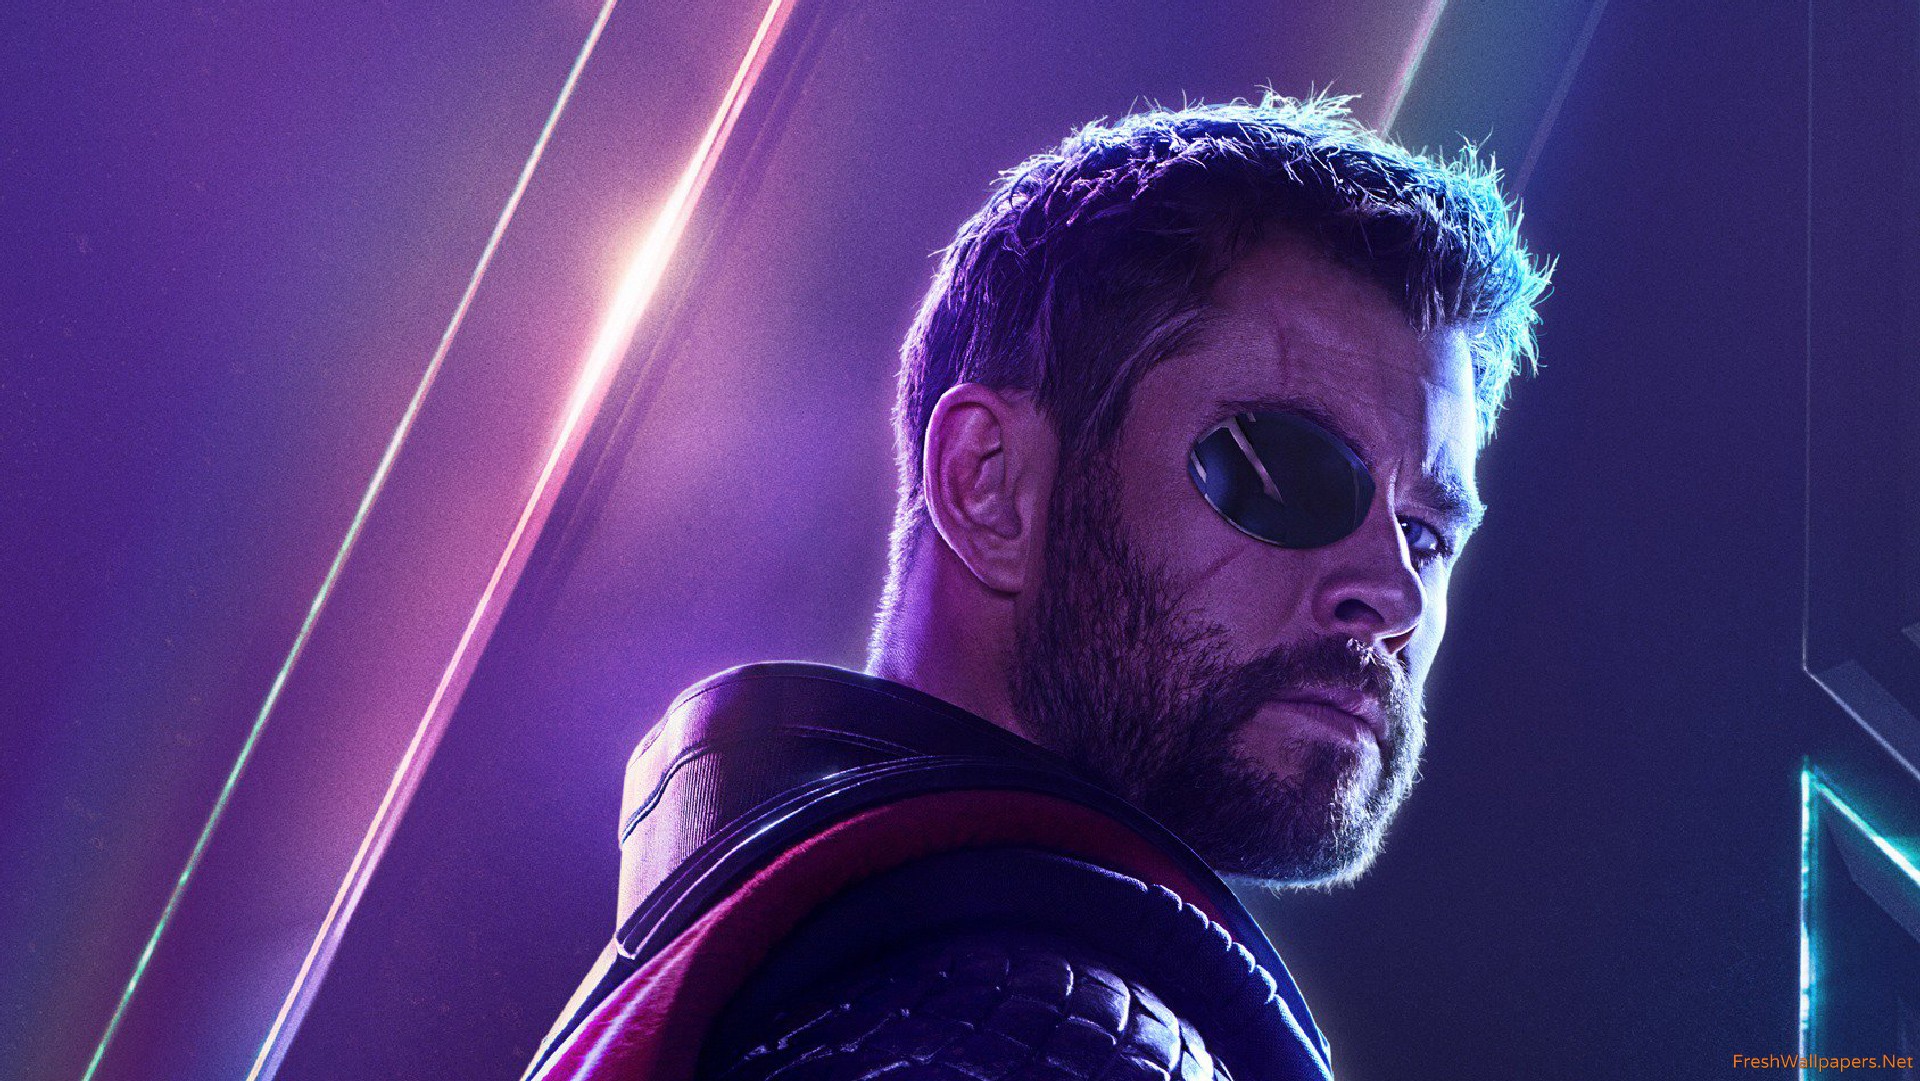 Thor In Avengers Infinity War New Poster Wallpaper Download High Resolution 4k Wallpaper